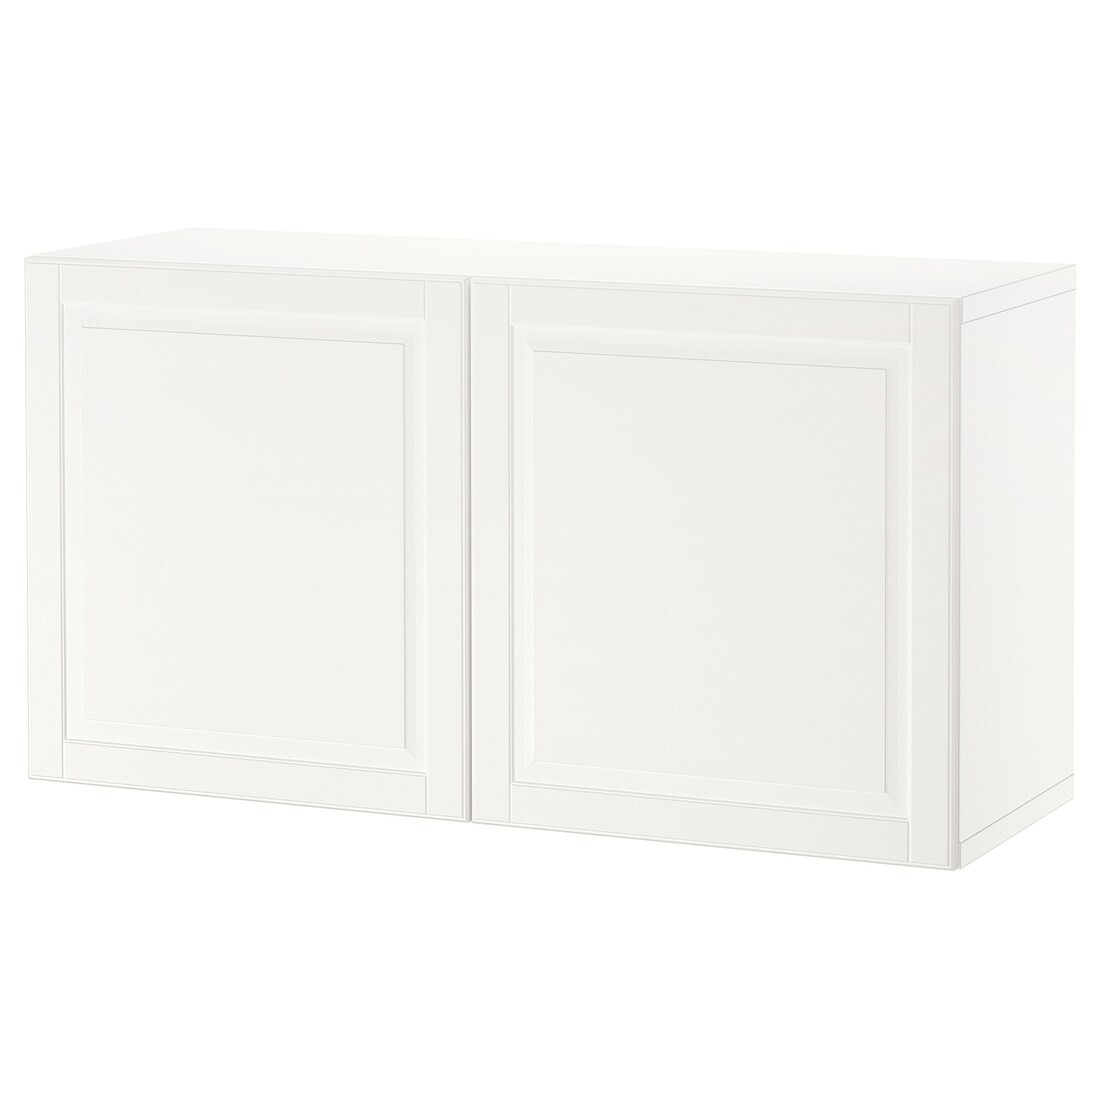 IKEA BESTÅ БЕСТО Шкаф с дверьми, белый / Smeviken белый, 120x42x64 см 09425155 094.251.55